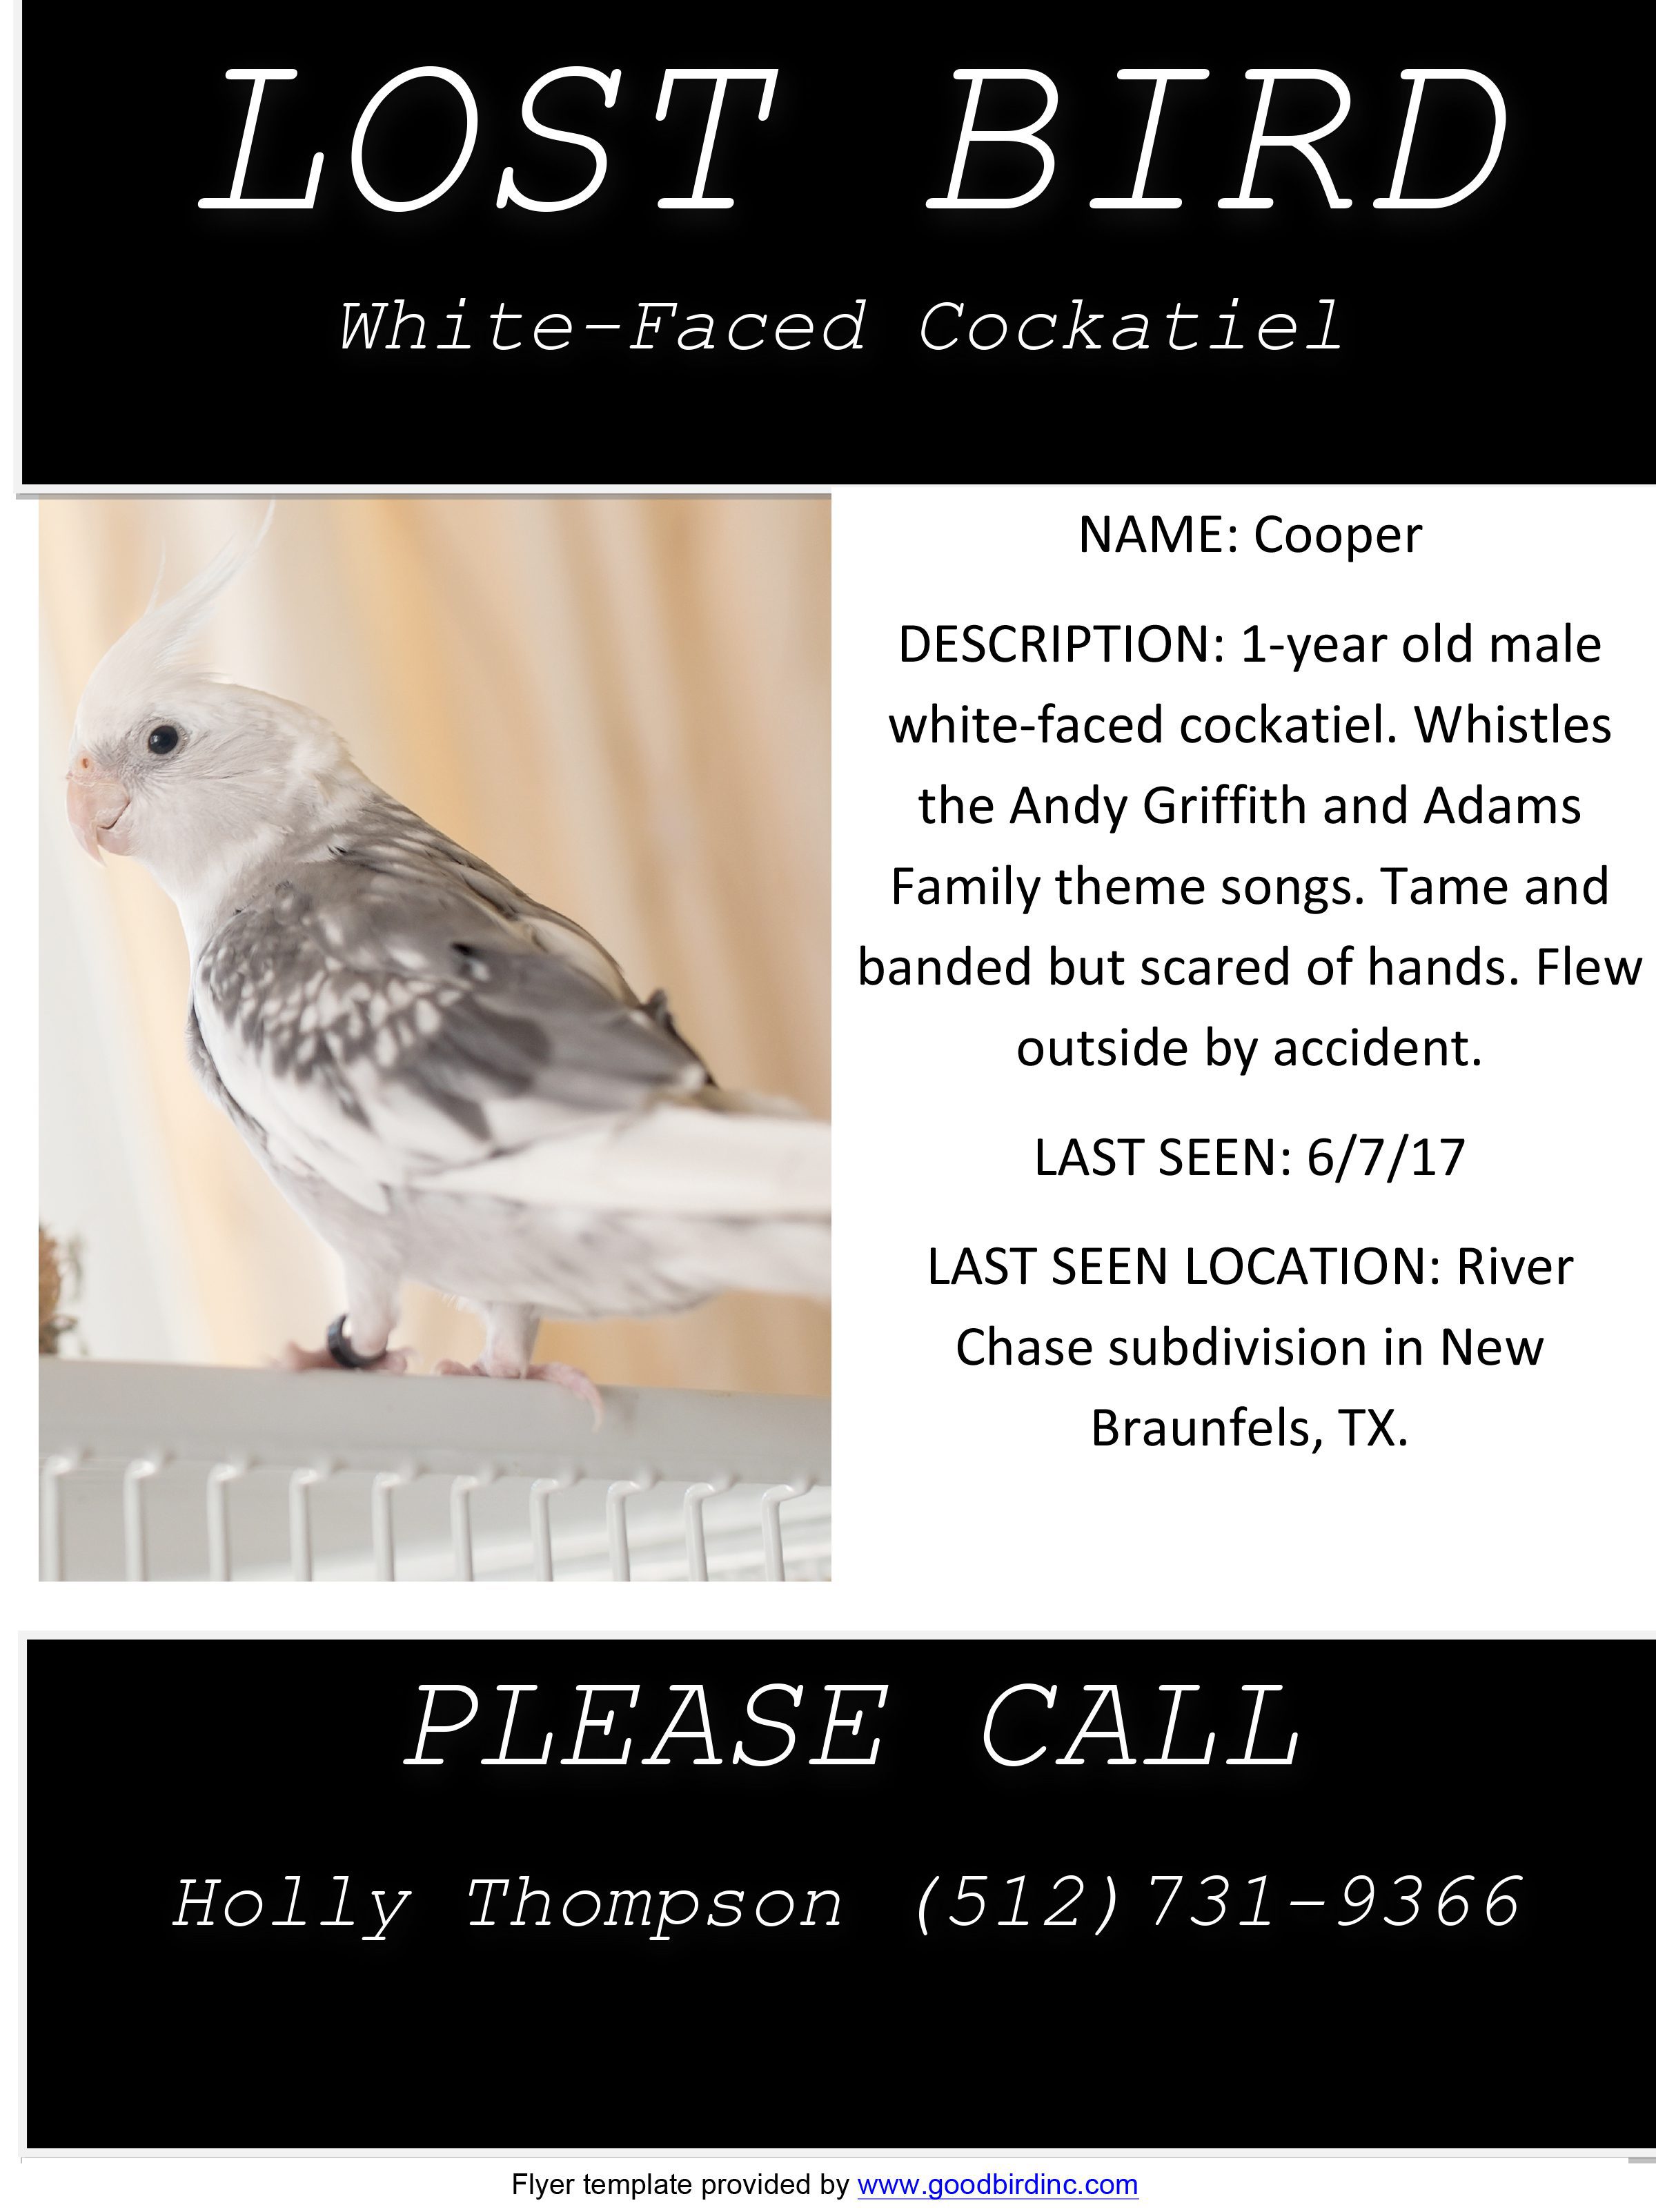 lost white-faced cockatiel